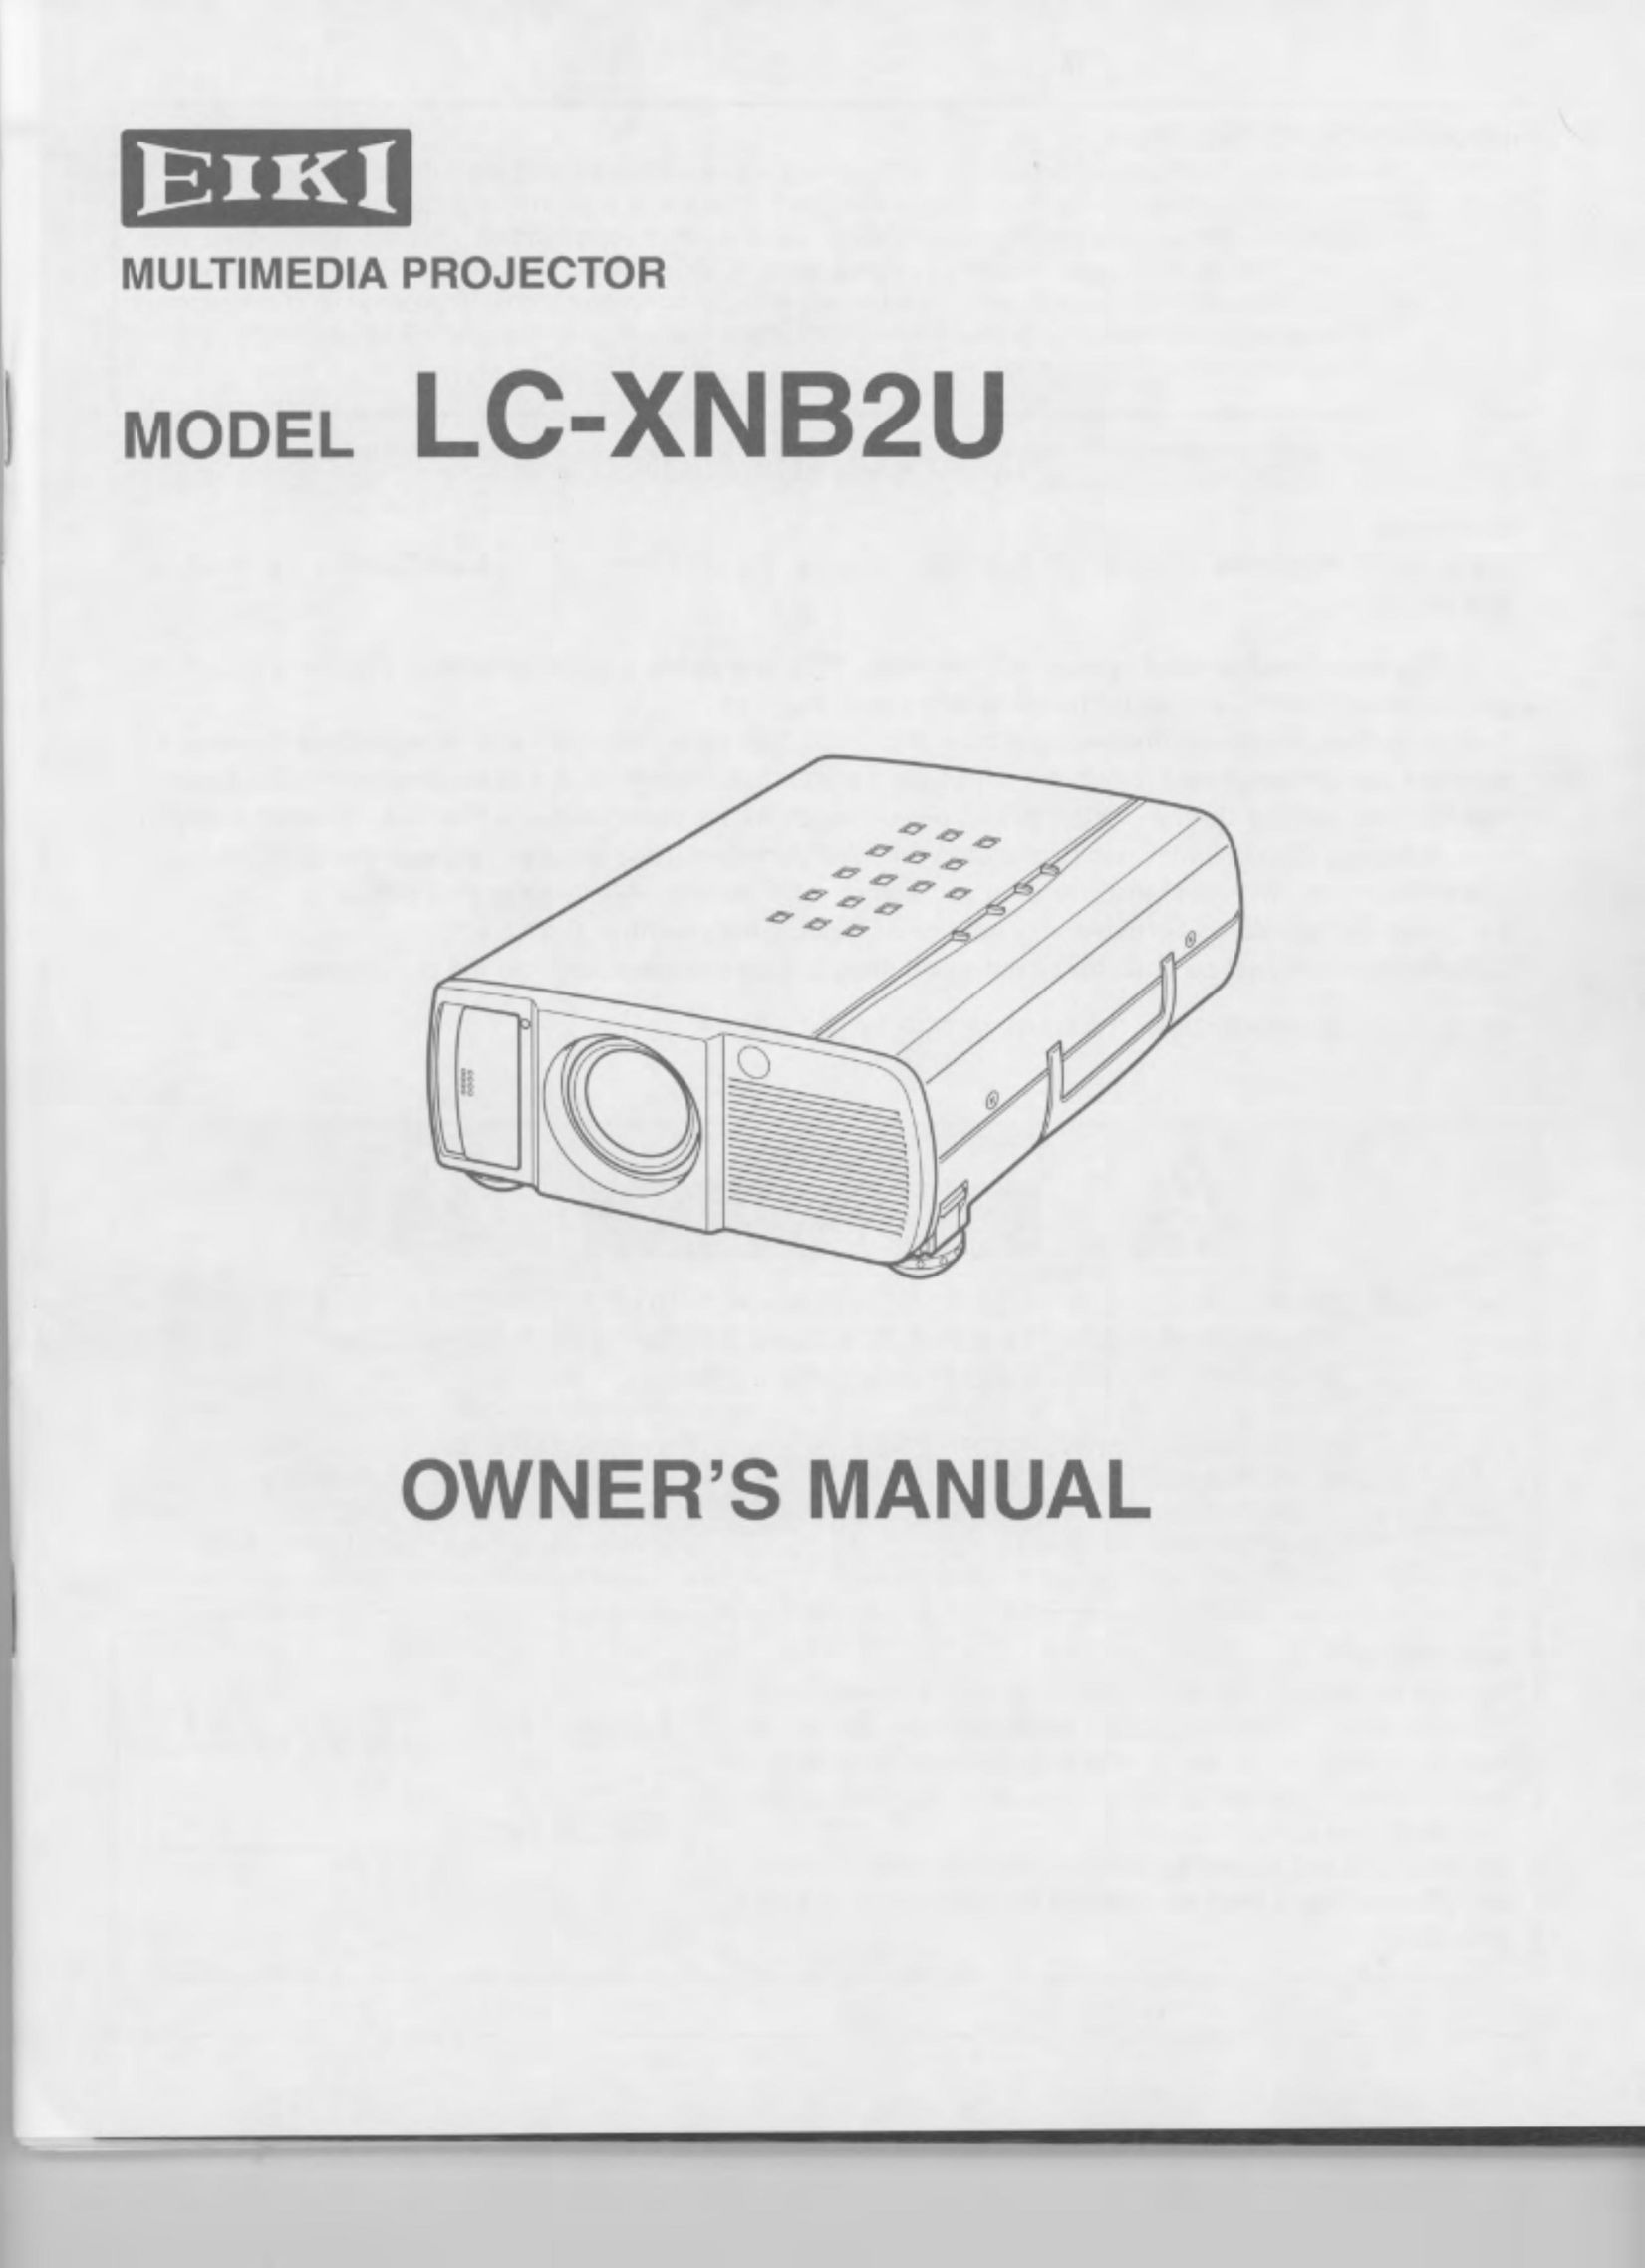 Eiki LC-XNB2U CRT Television User Manual